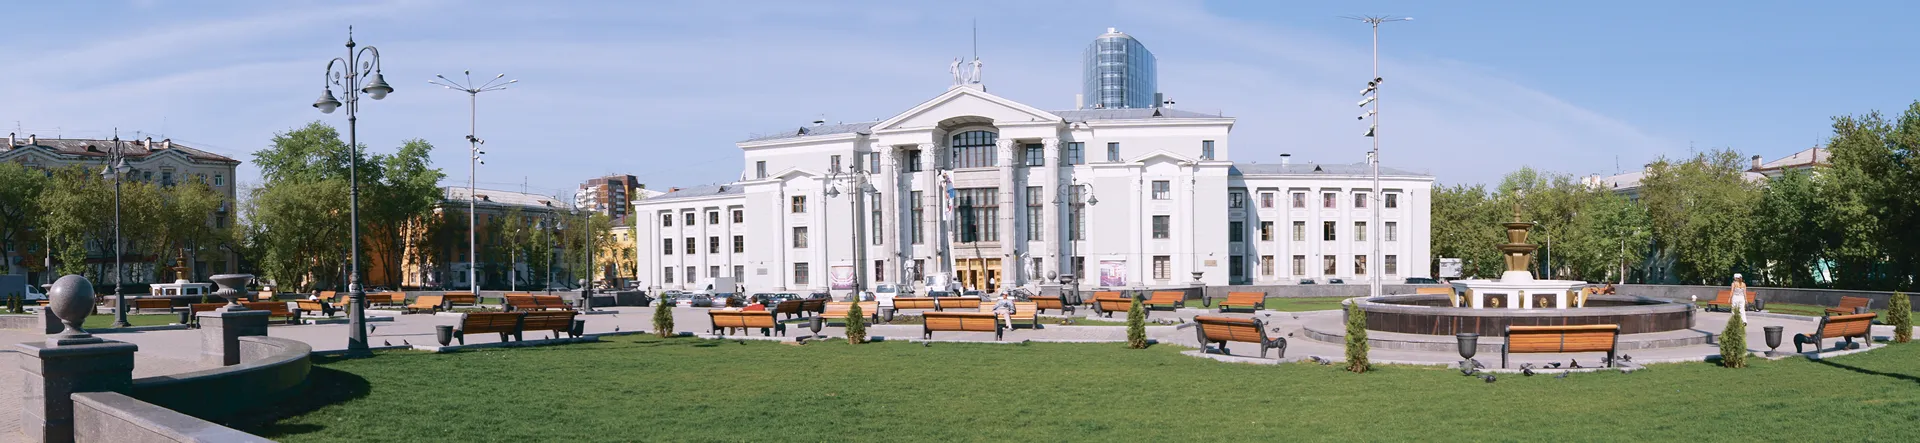 Дворец культуры им. Солдатова / Palace of Culture by the name of Soldatov